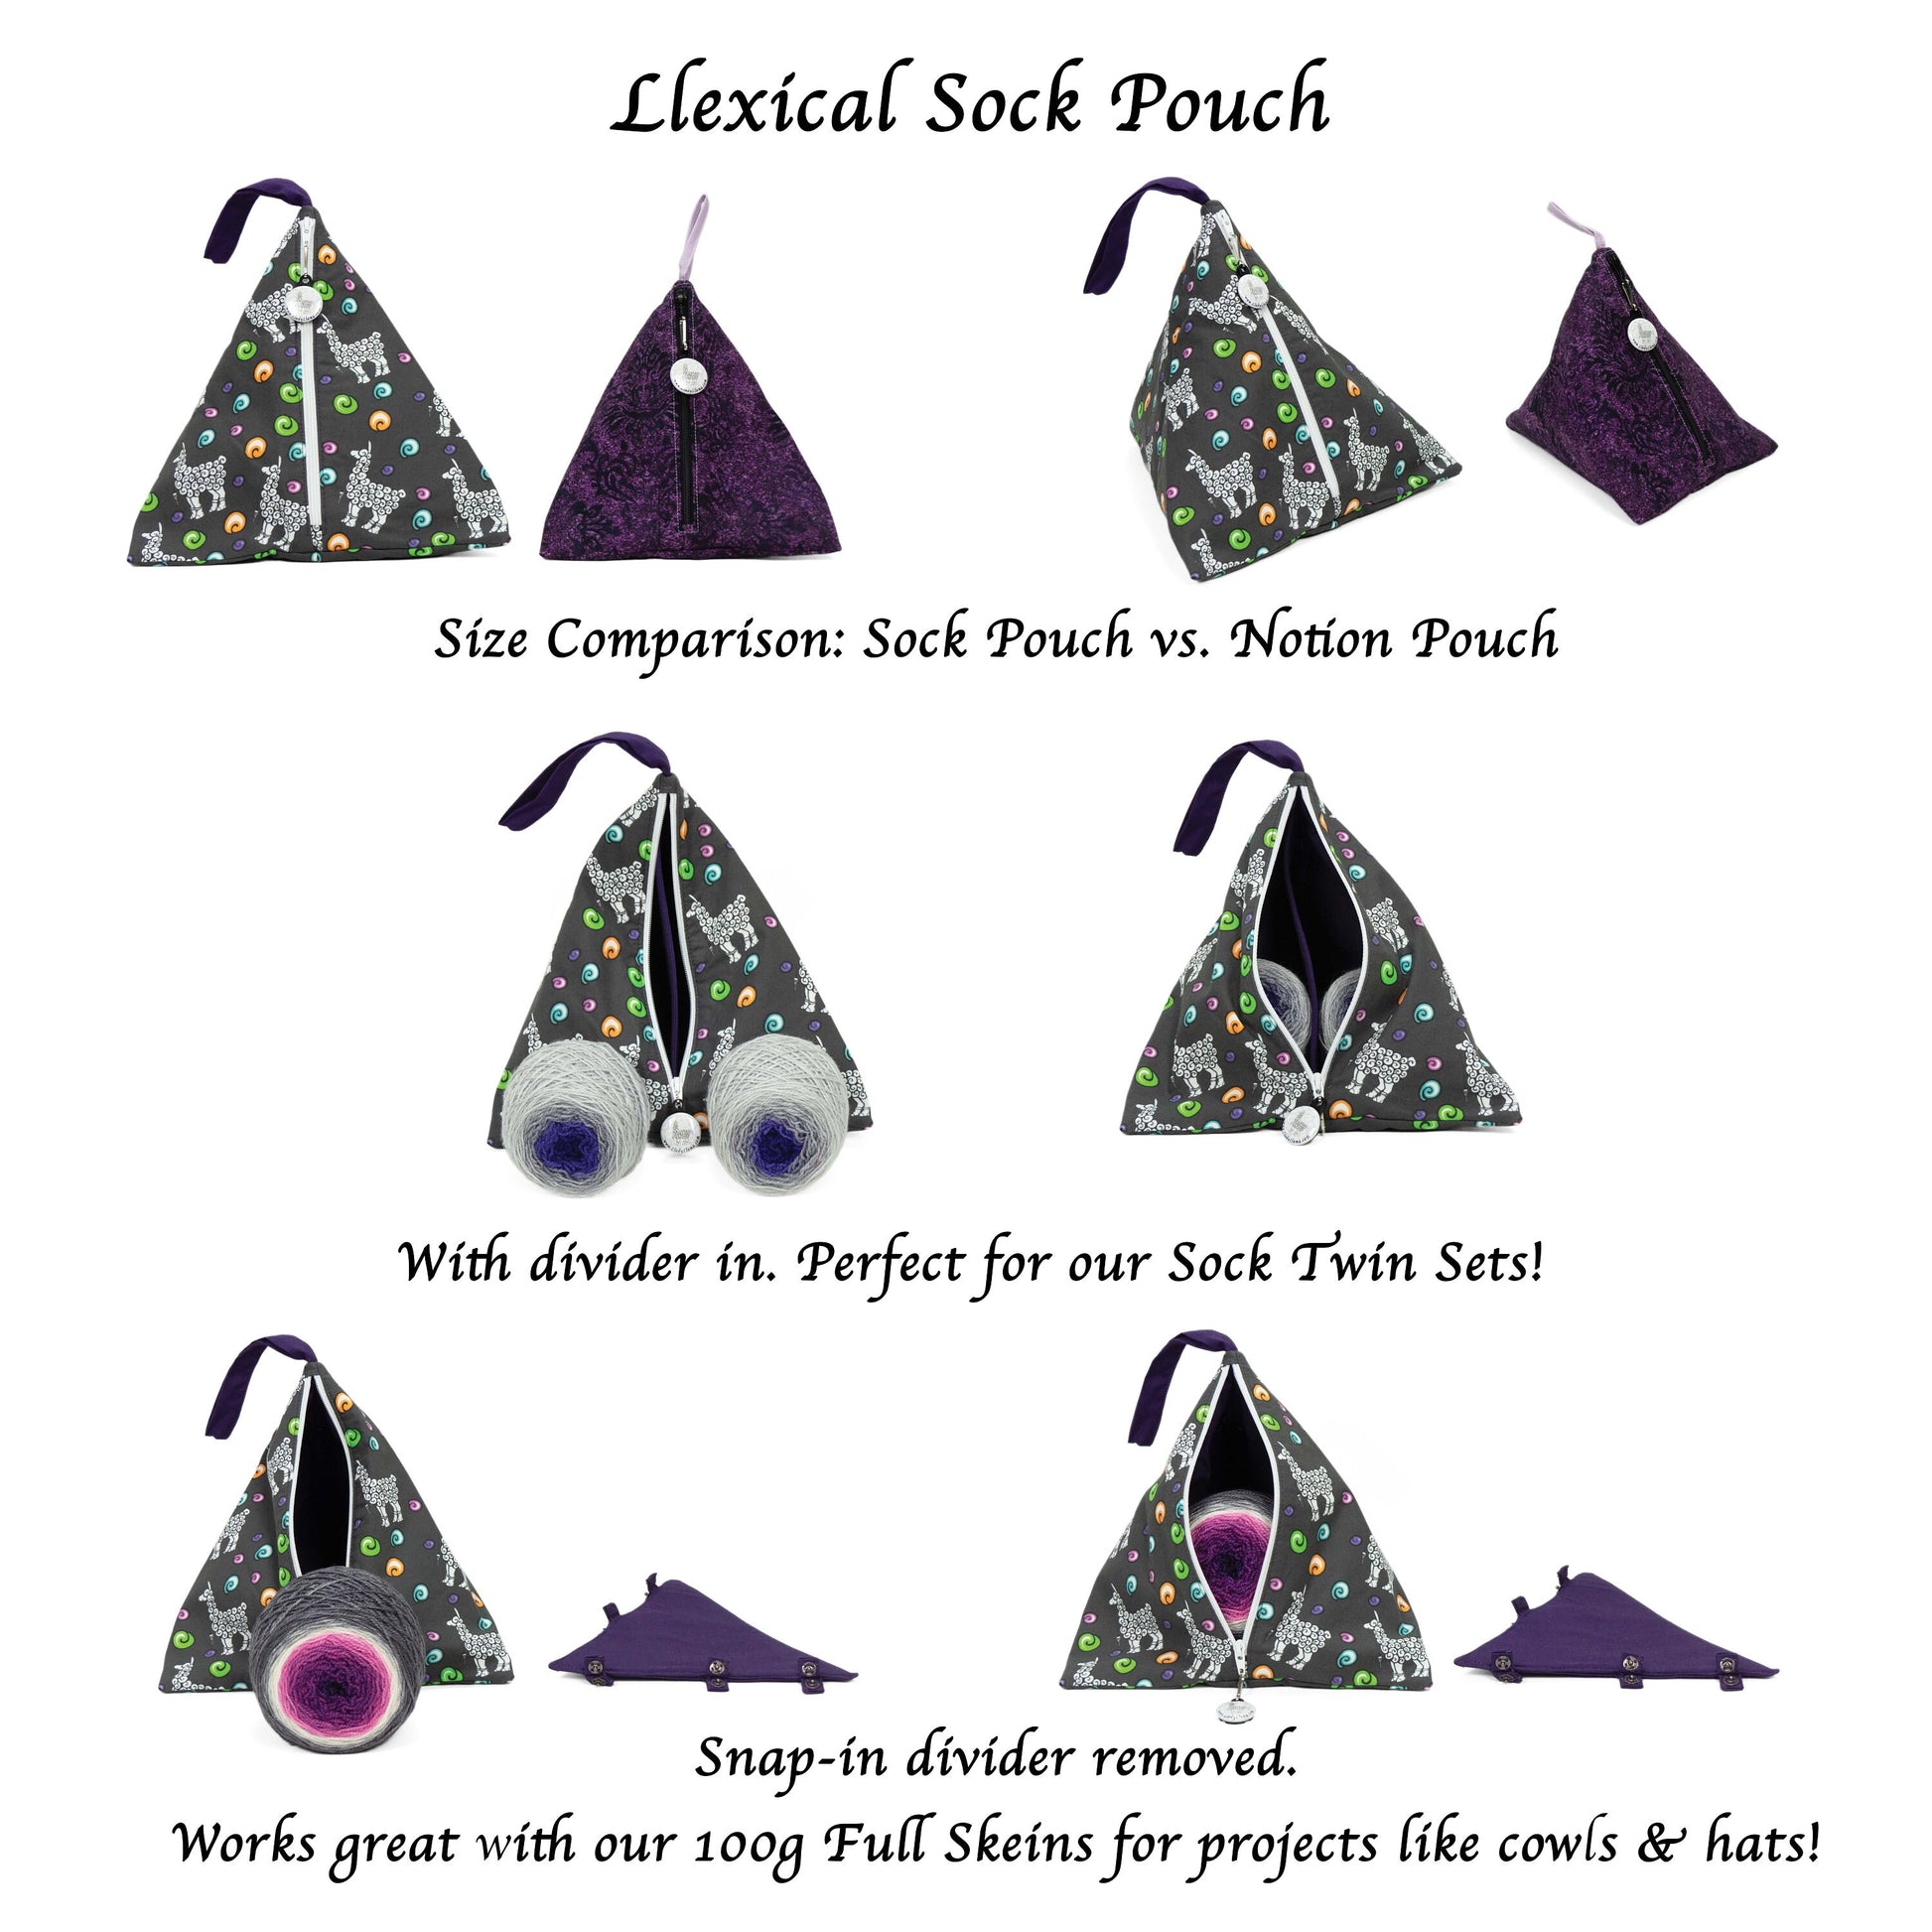 Sock Pouch - Elli Swirl Dream Dark - Llexical Divided Sock Pouch - Knitting, Crochet, Spinning Project Bag